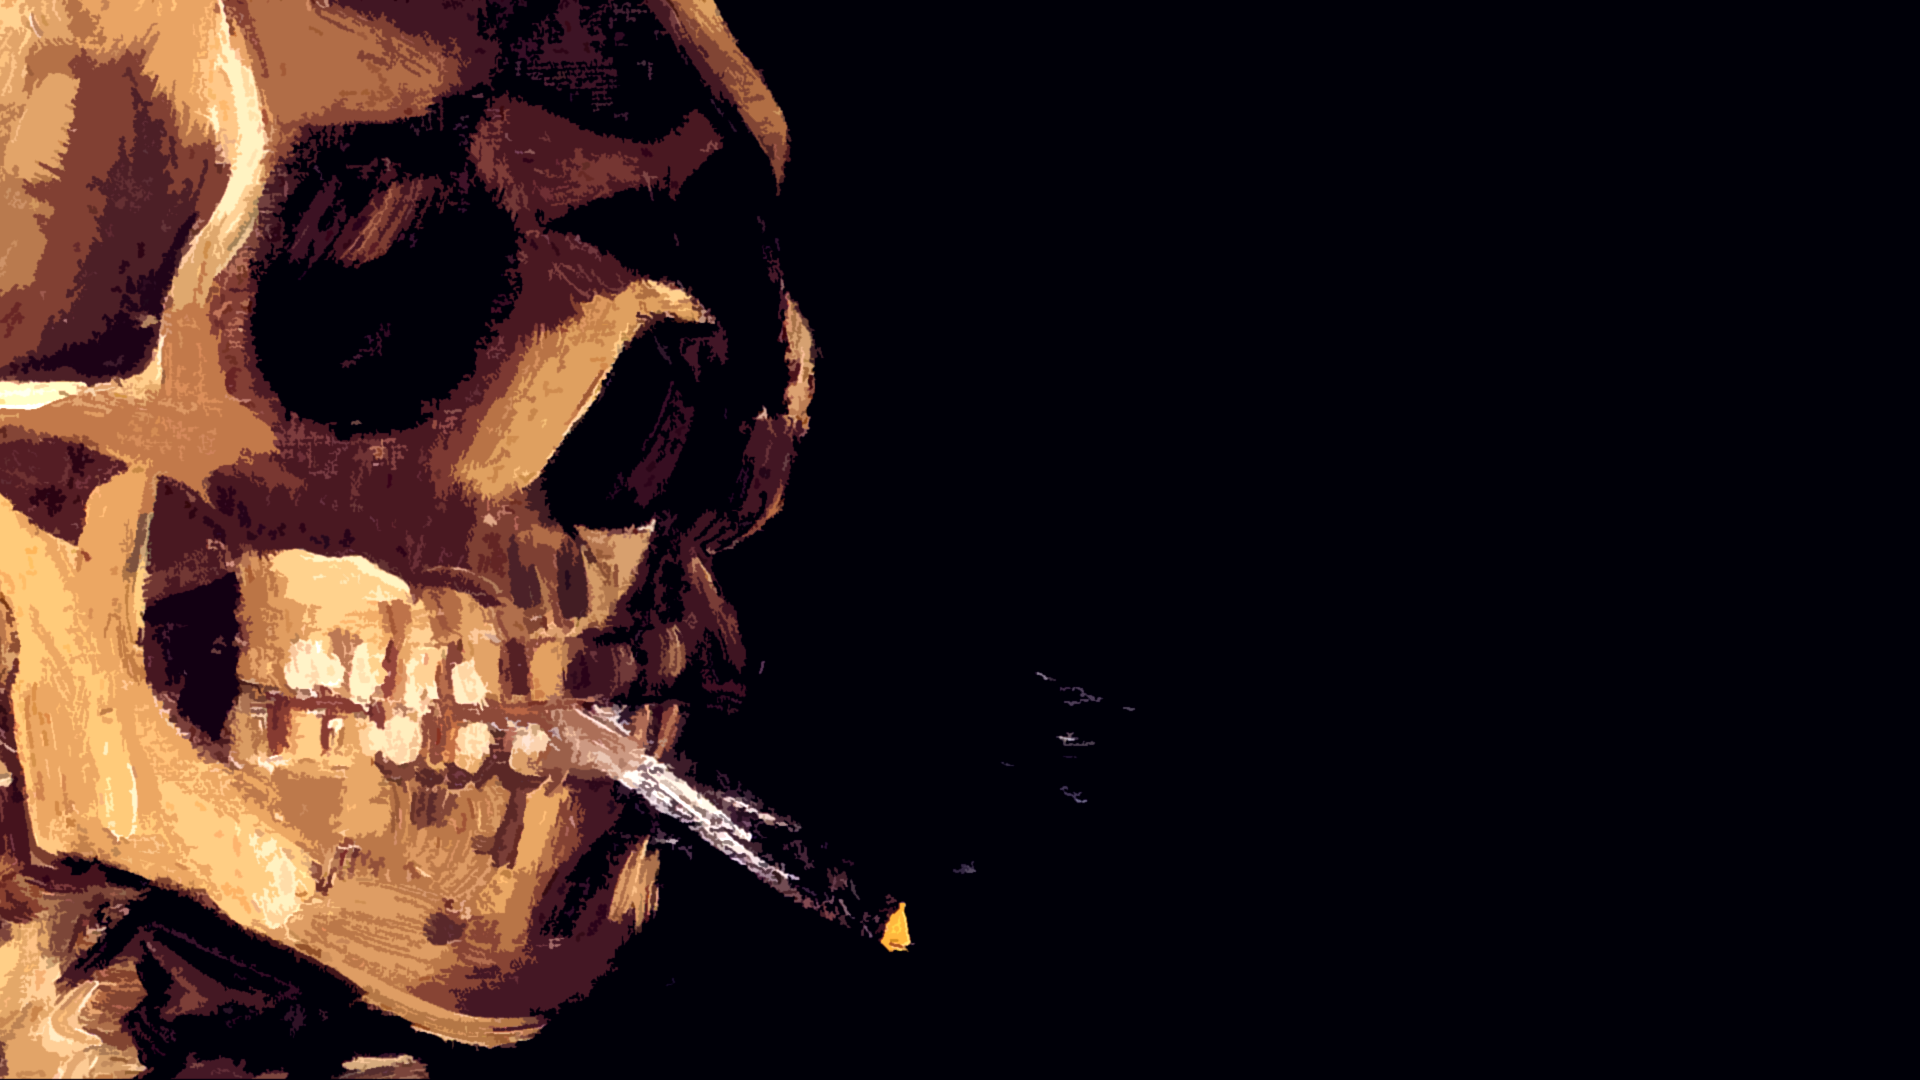 Smoking Skull wallpaper by MsGanjaGirl  Download on ZEDGE  41c1